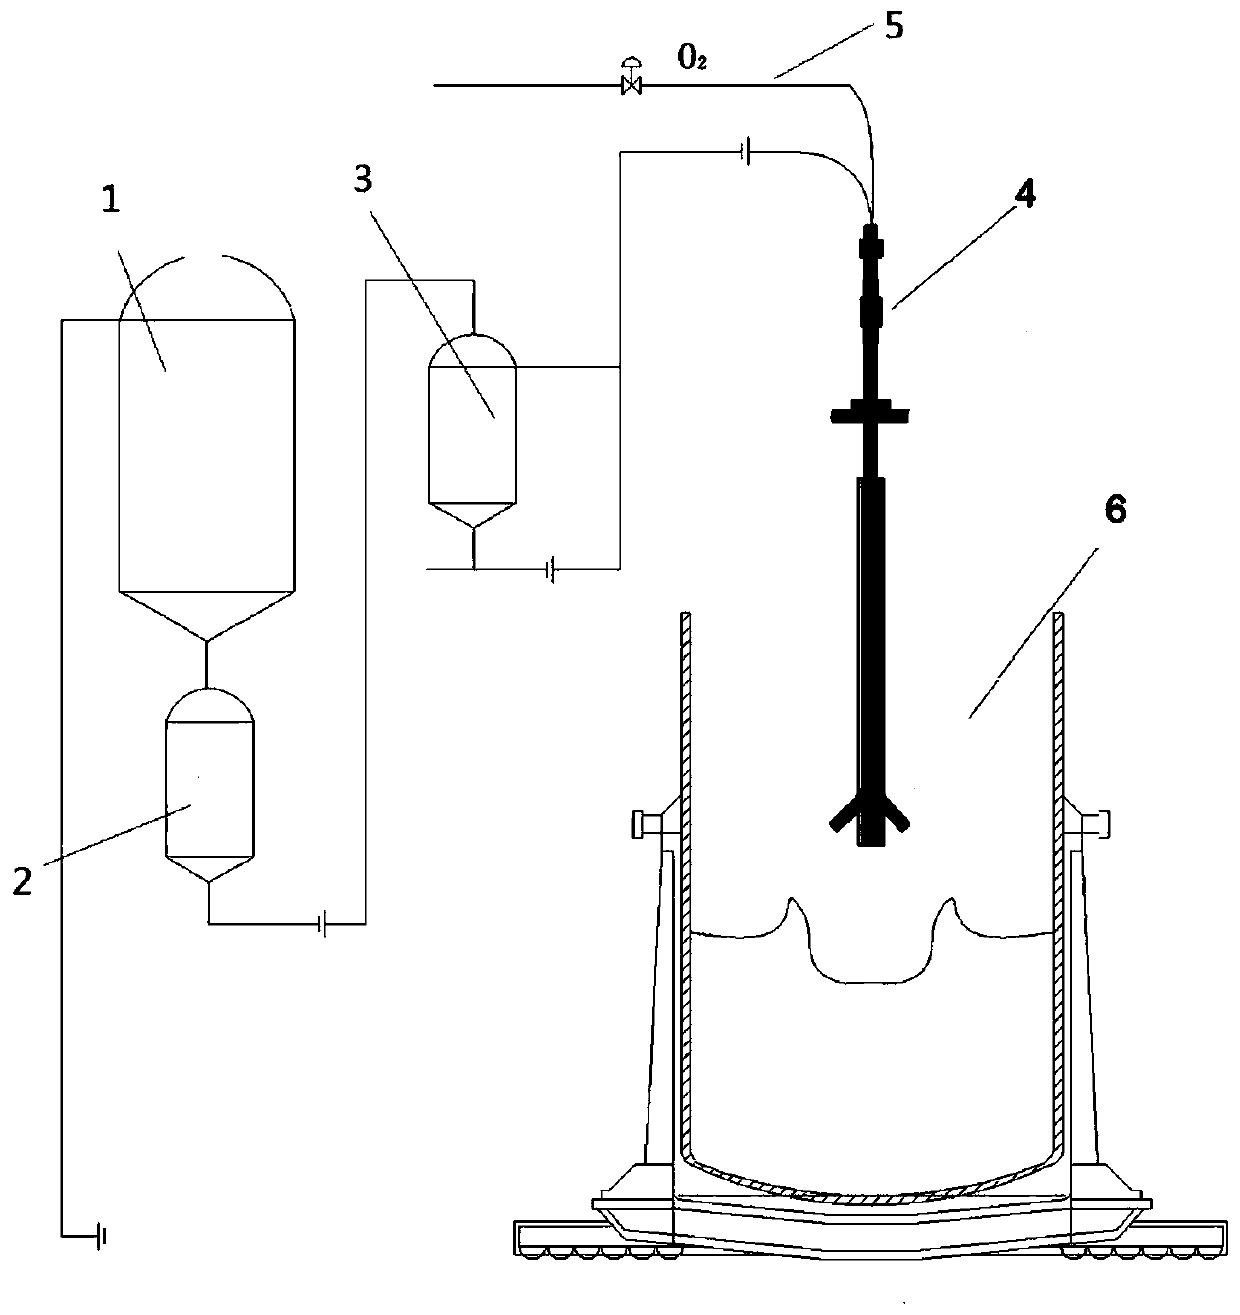 Molten iron dephosphorization device and dephosphorization method for smelting stainless steel